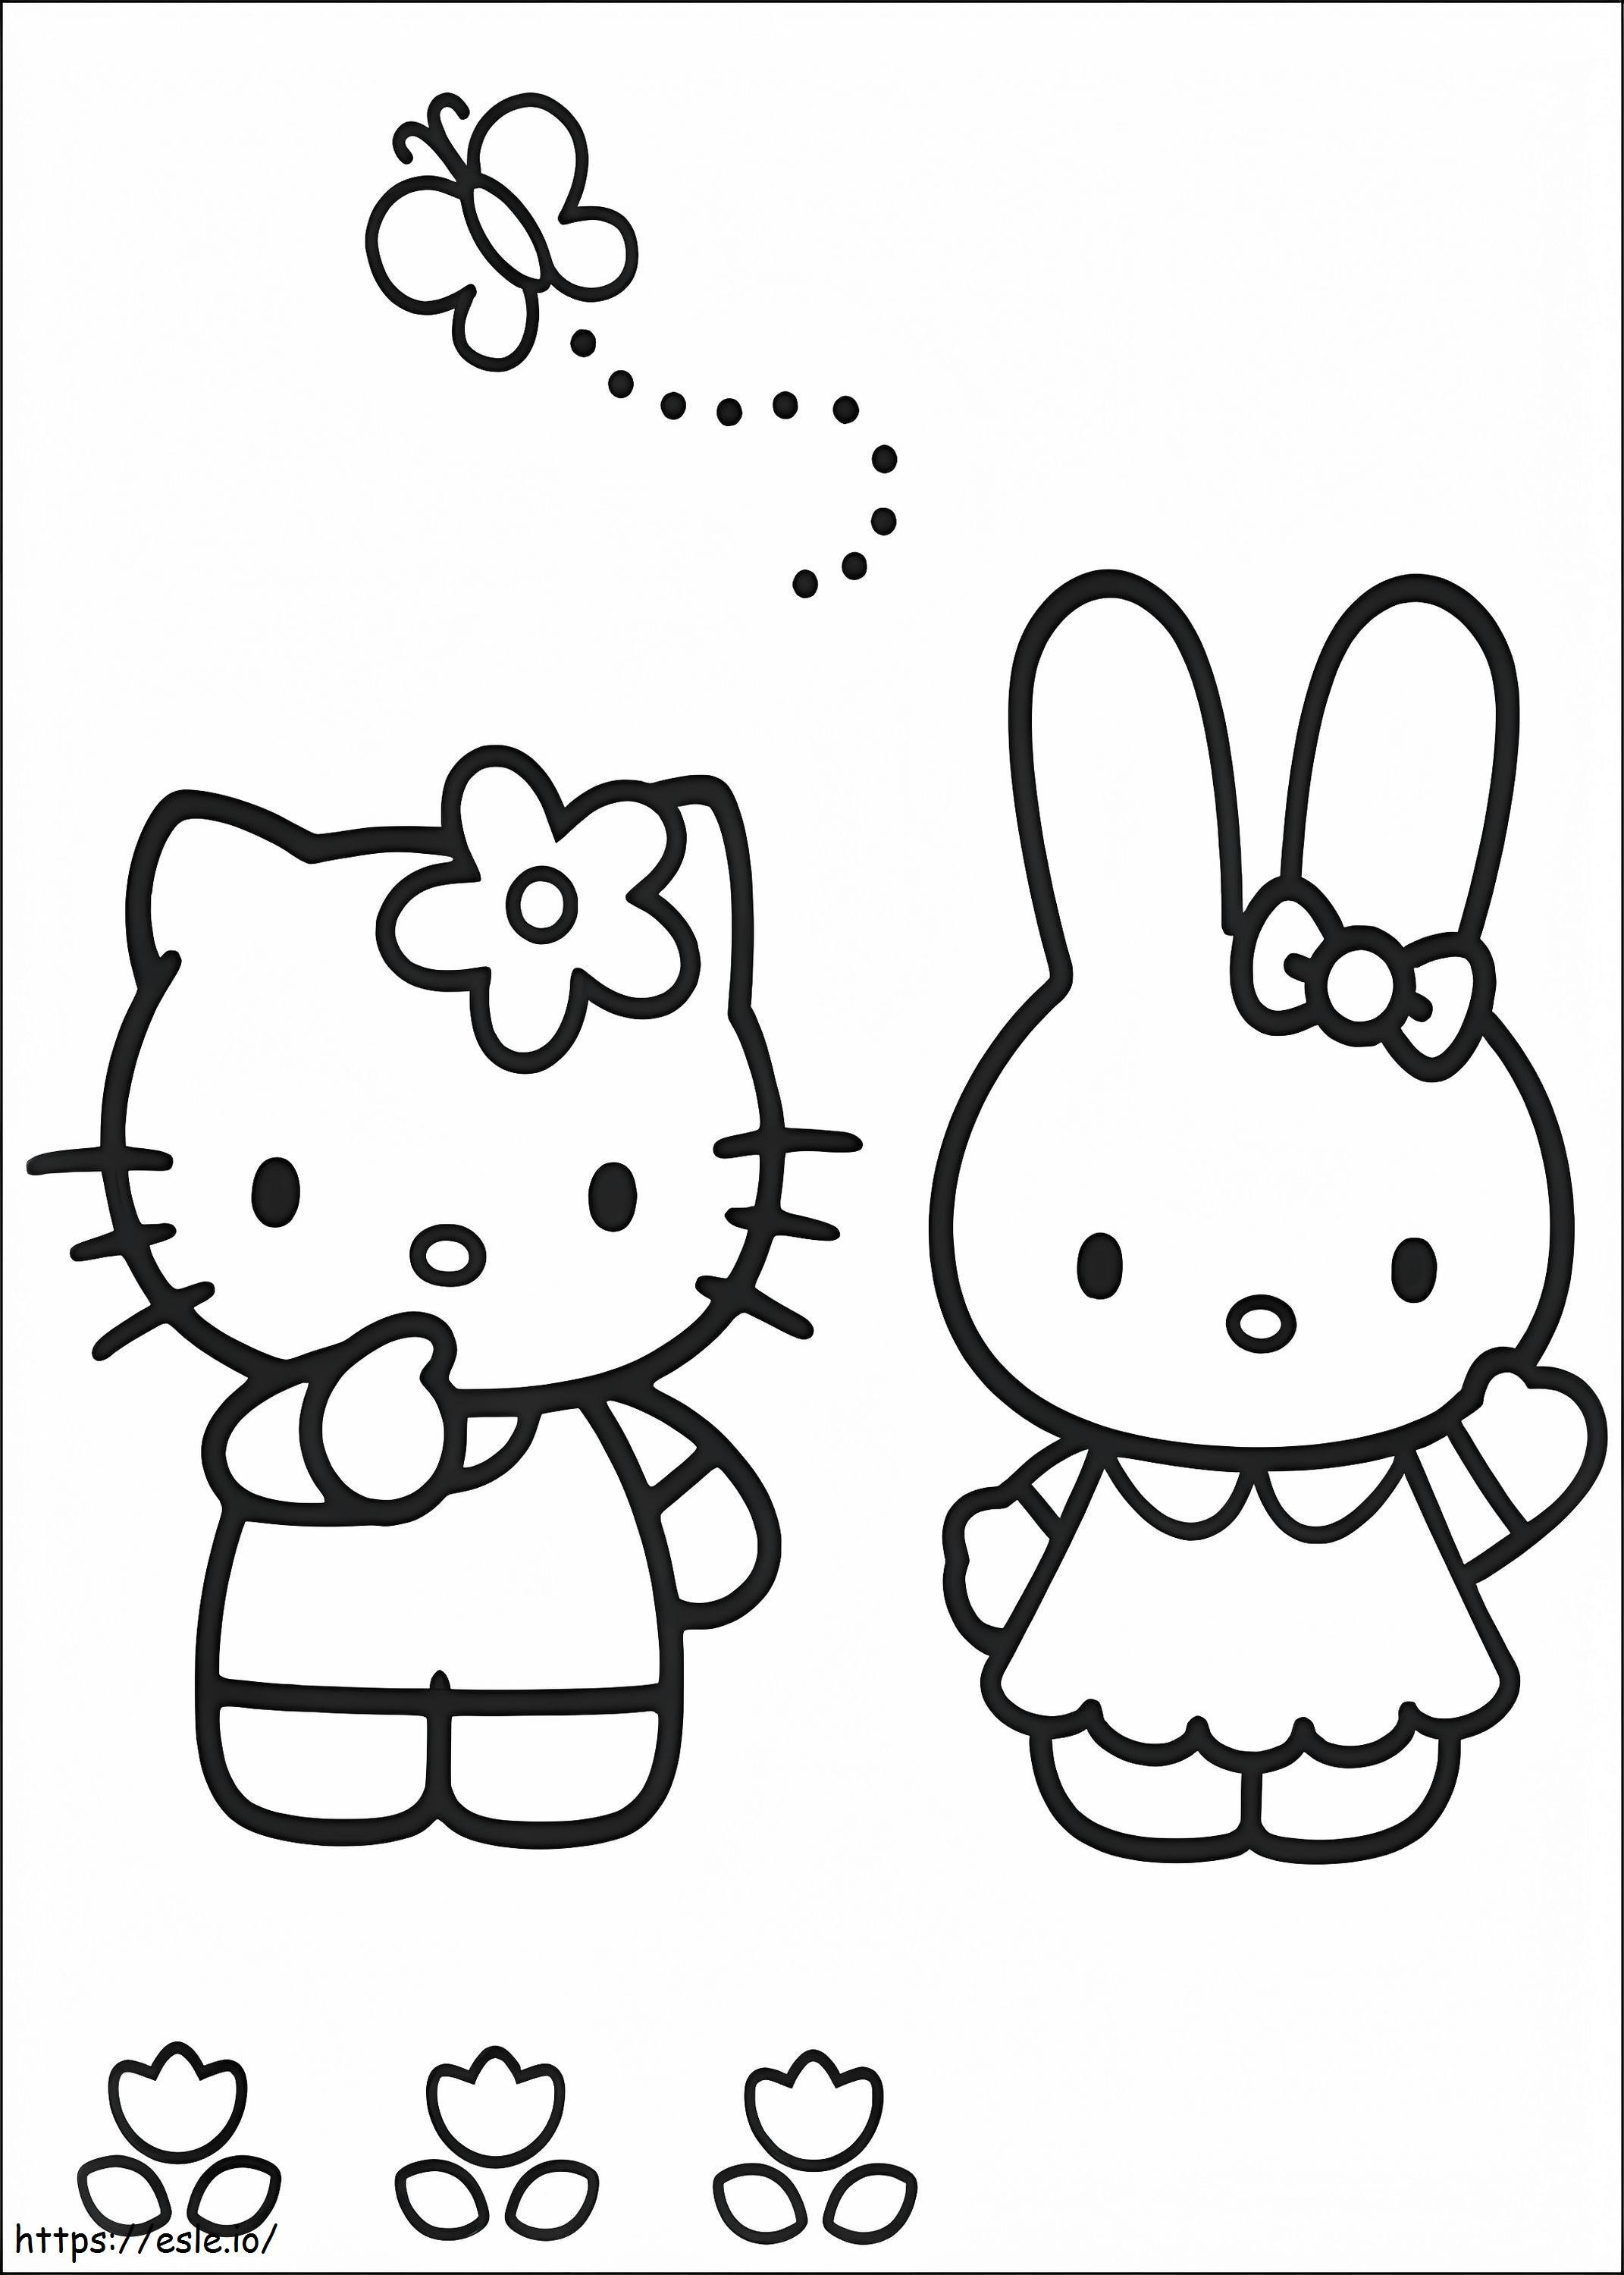 Hello Kitty și iepure de colorat